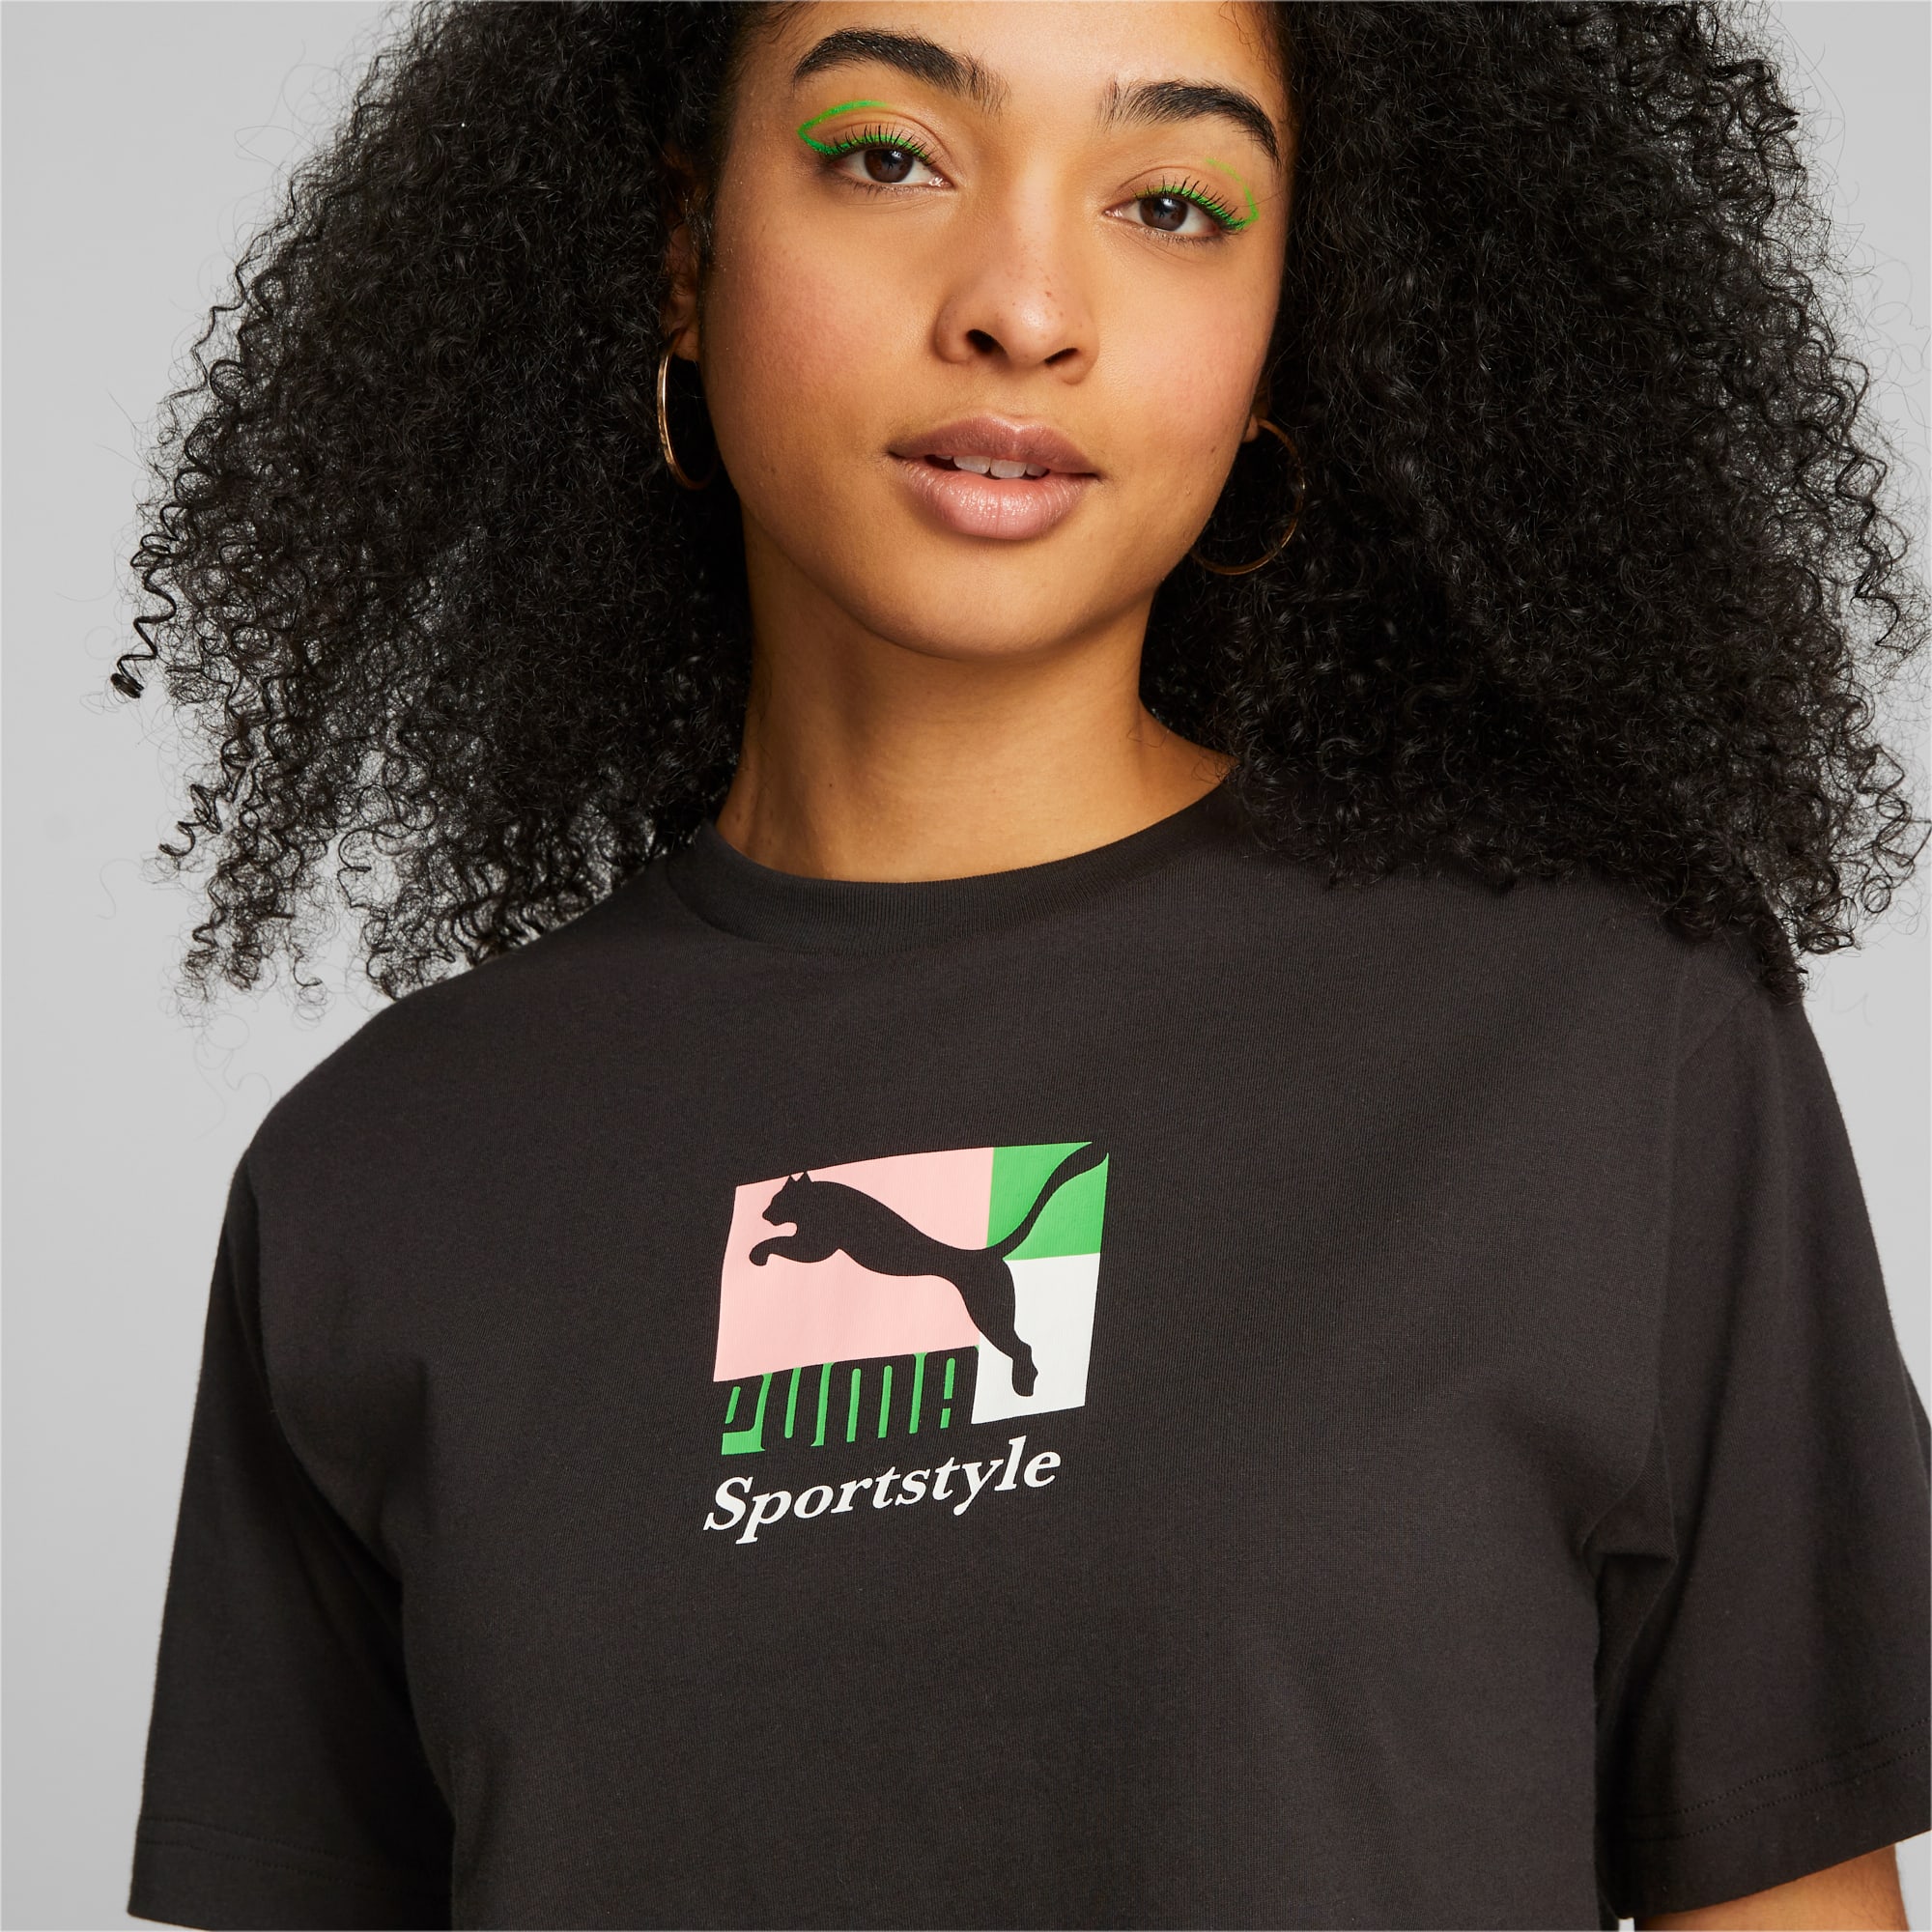 PUMA Classics Brand Love Women's T-Shirt, Black, Size M, Clothing